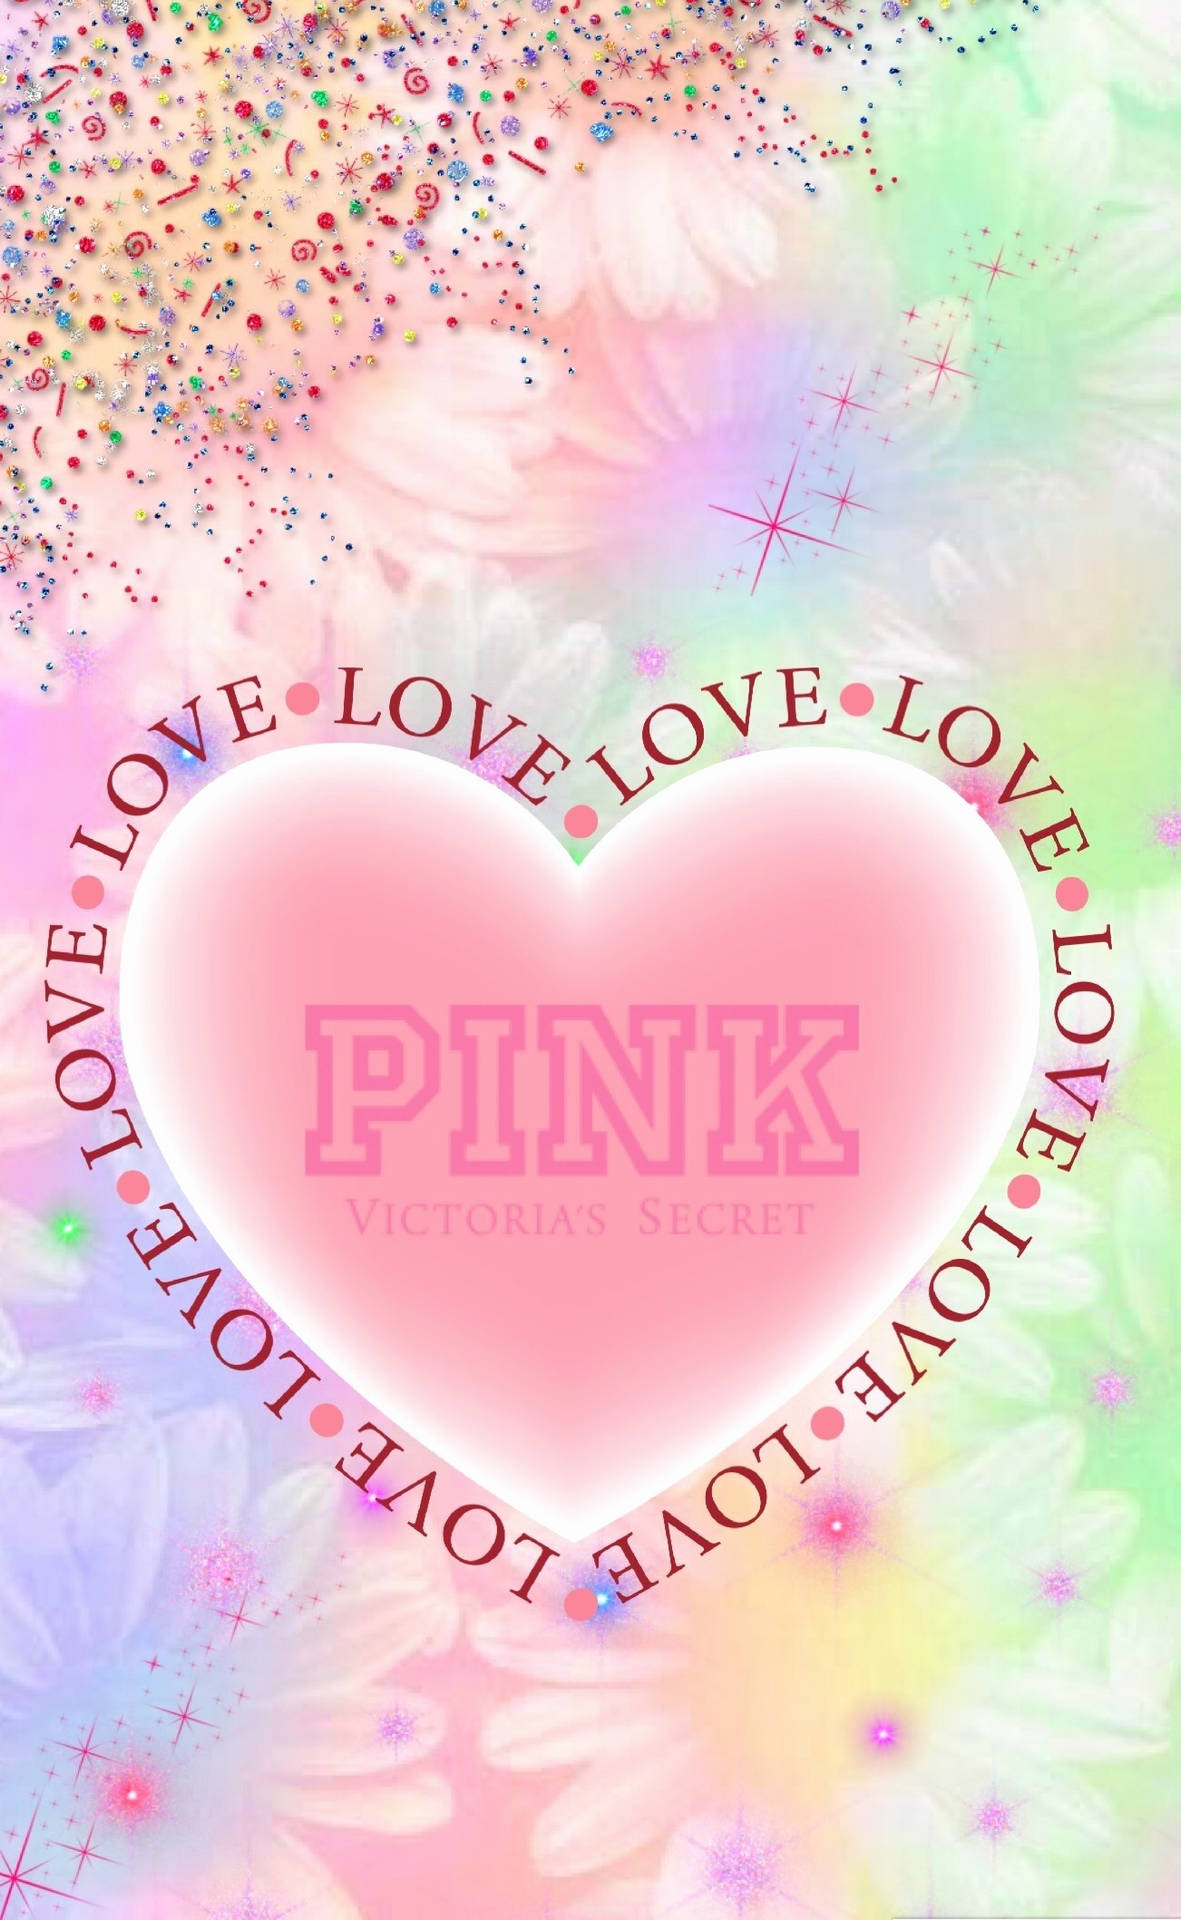 Victoria's Secret Heart Pink Floral Background